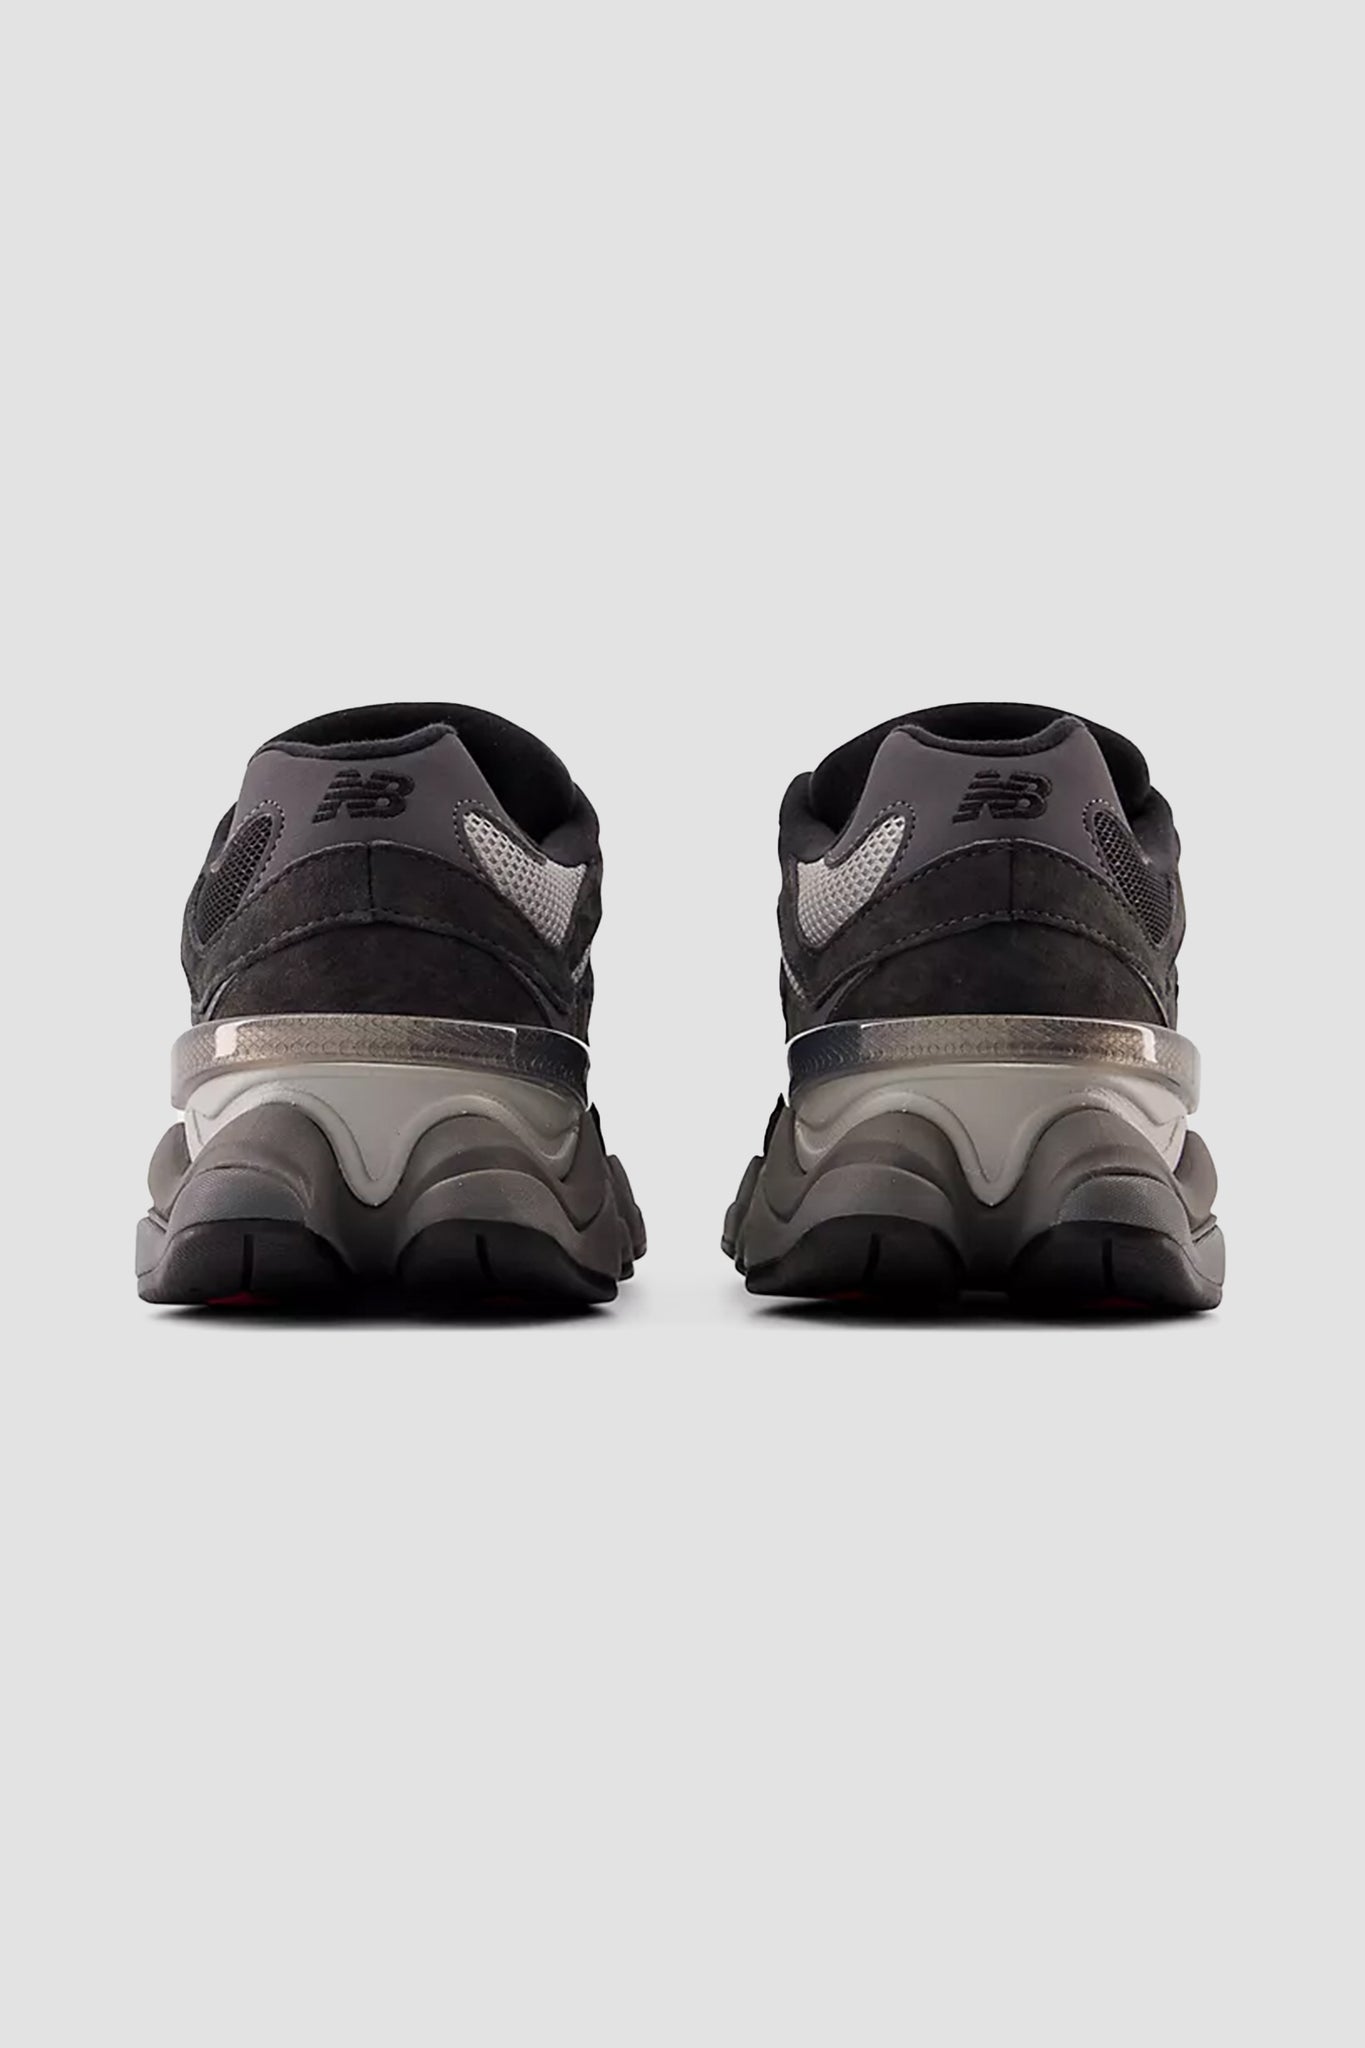 New Balance Unisex 9060 Sneaker in Black with Castlerock and Rain Cloud